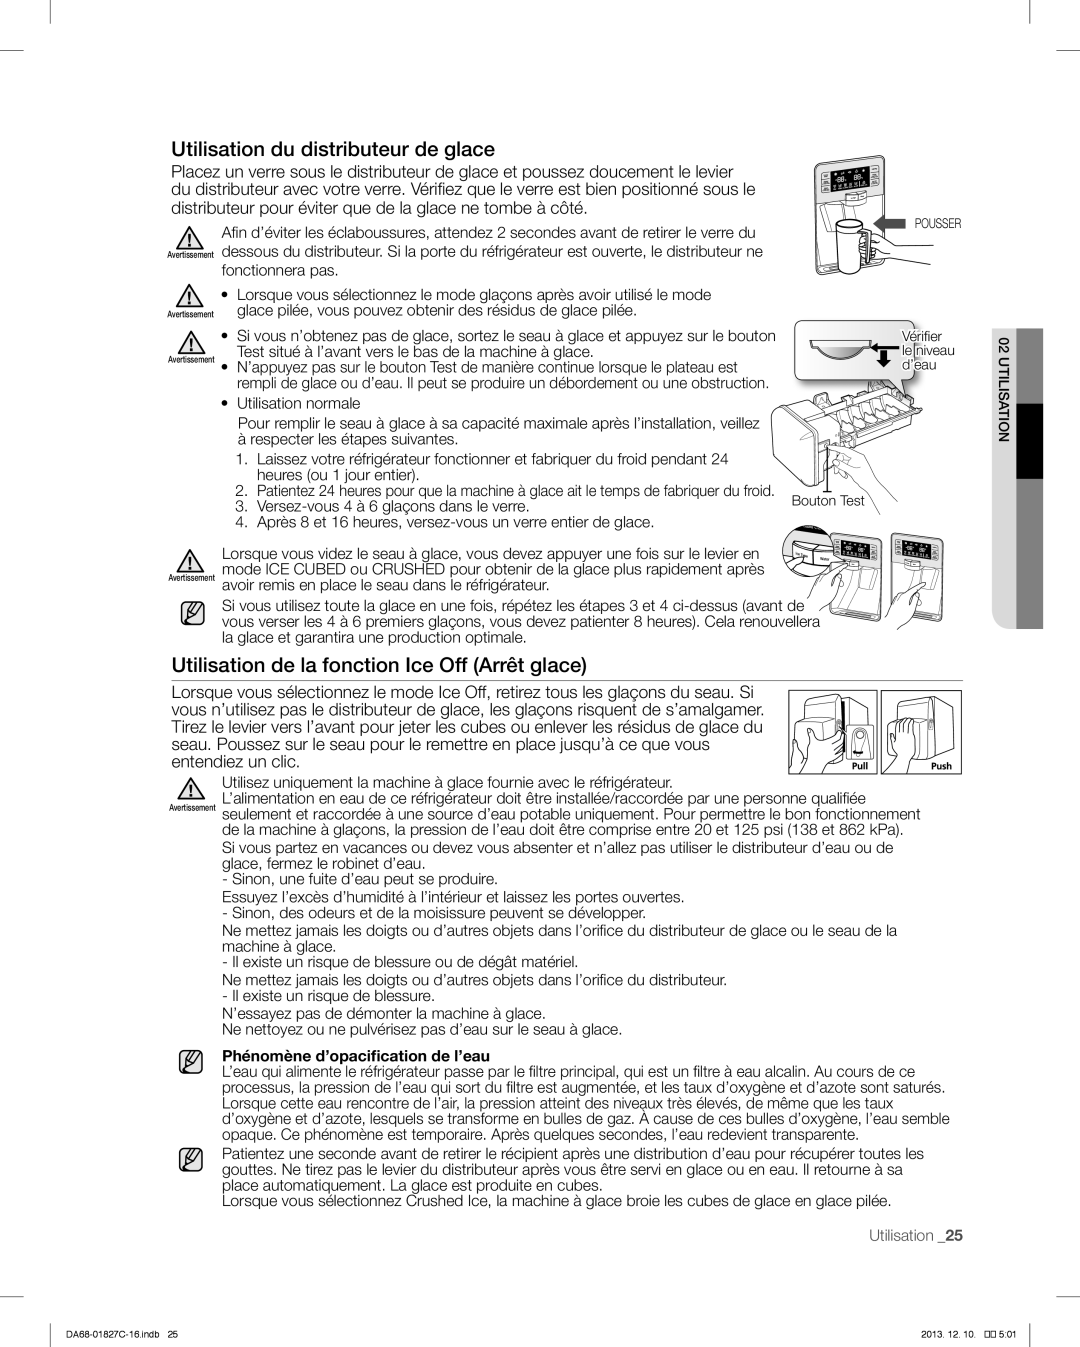 Samsung RFG237AARS user manual Utilisation du distributeur de glace, Utilisation de la fonction Ice Off Arrêt glace 